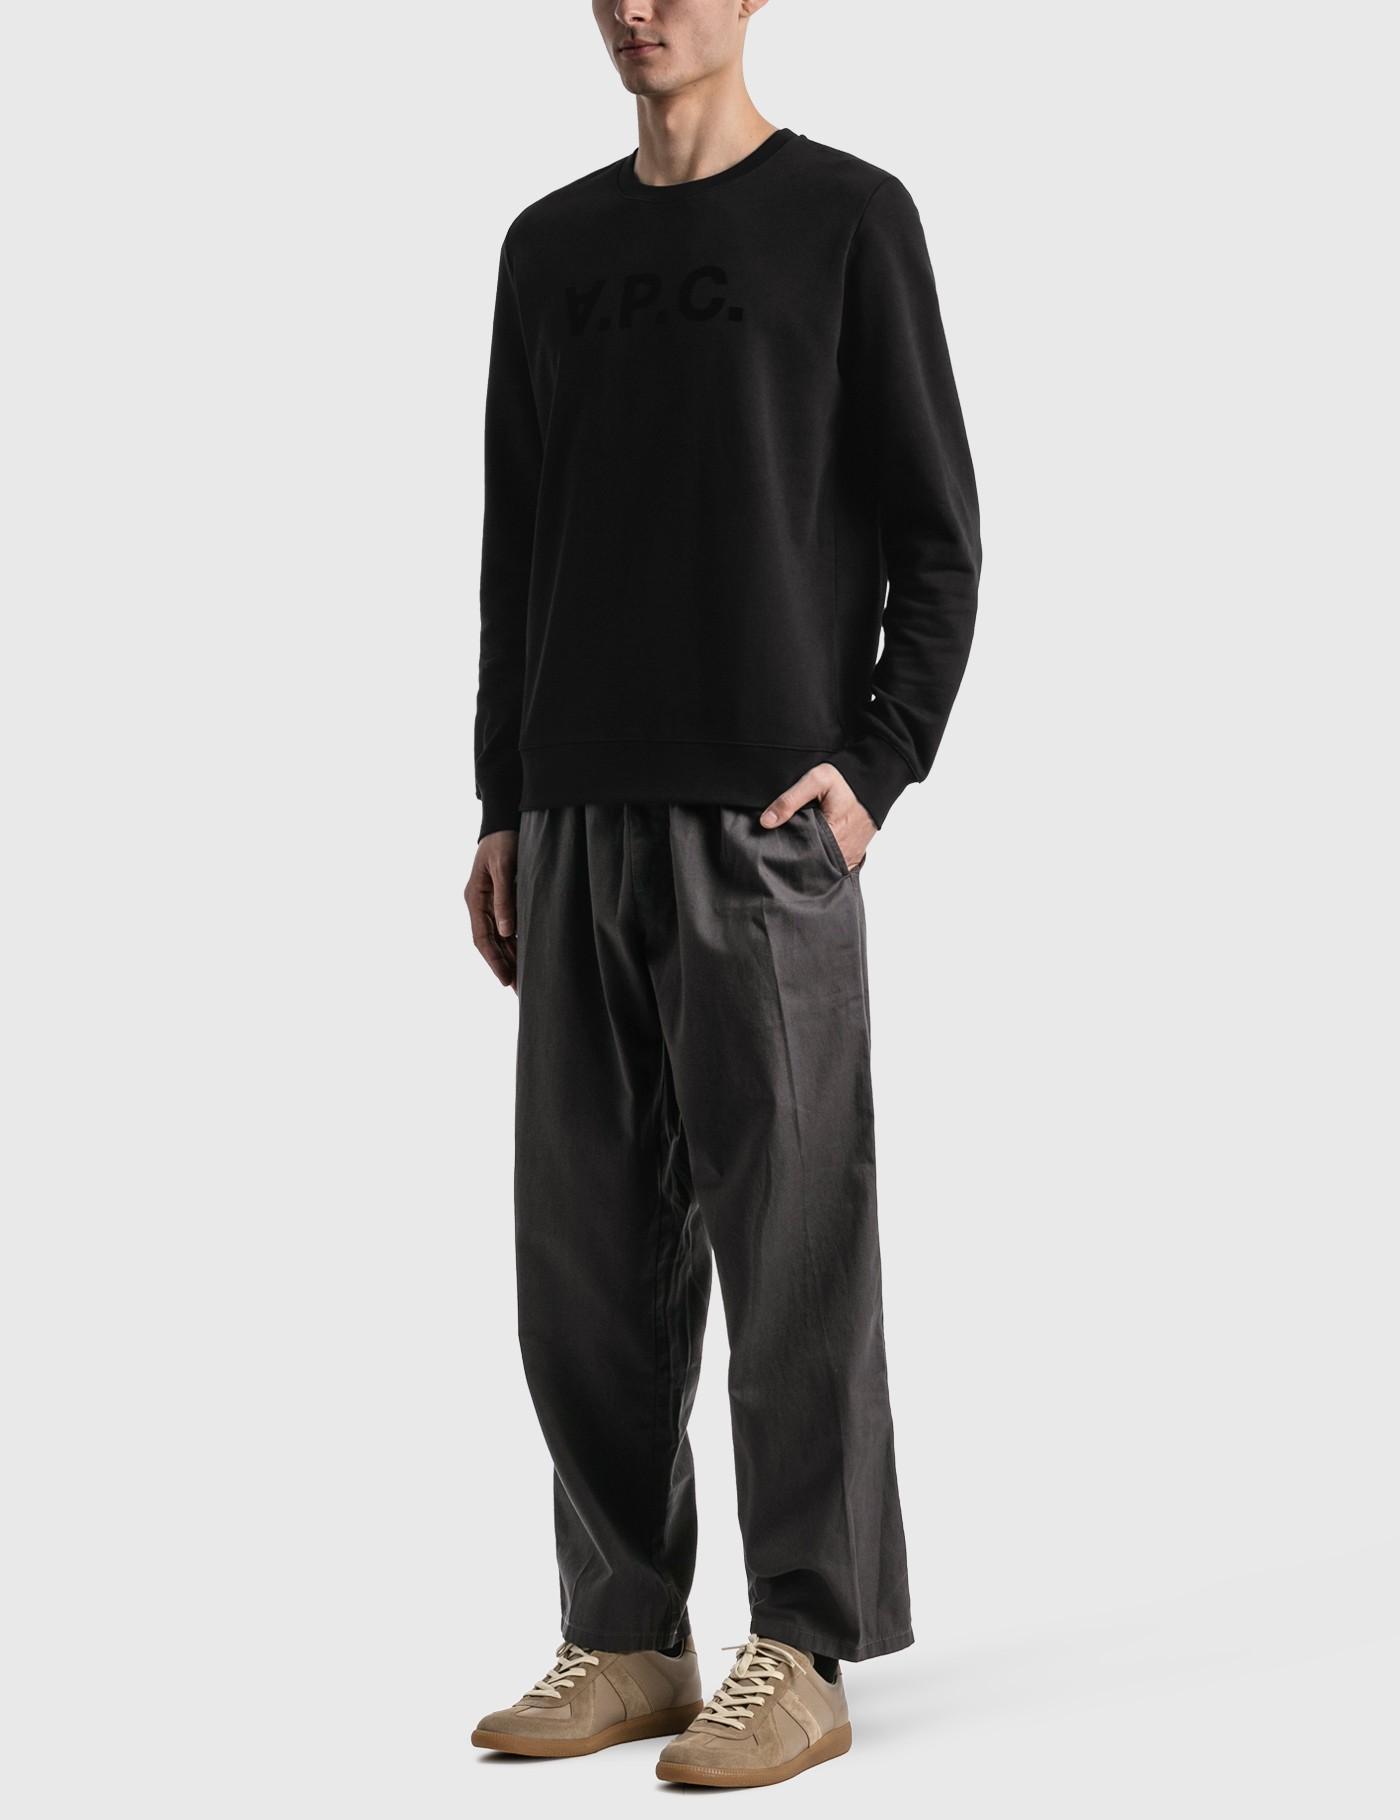 A.P.C. Vpc Sweatshirt in Black for Men - Lyst